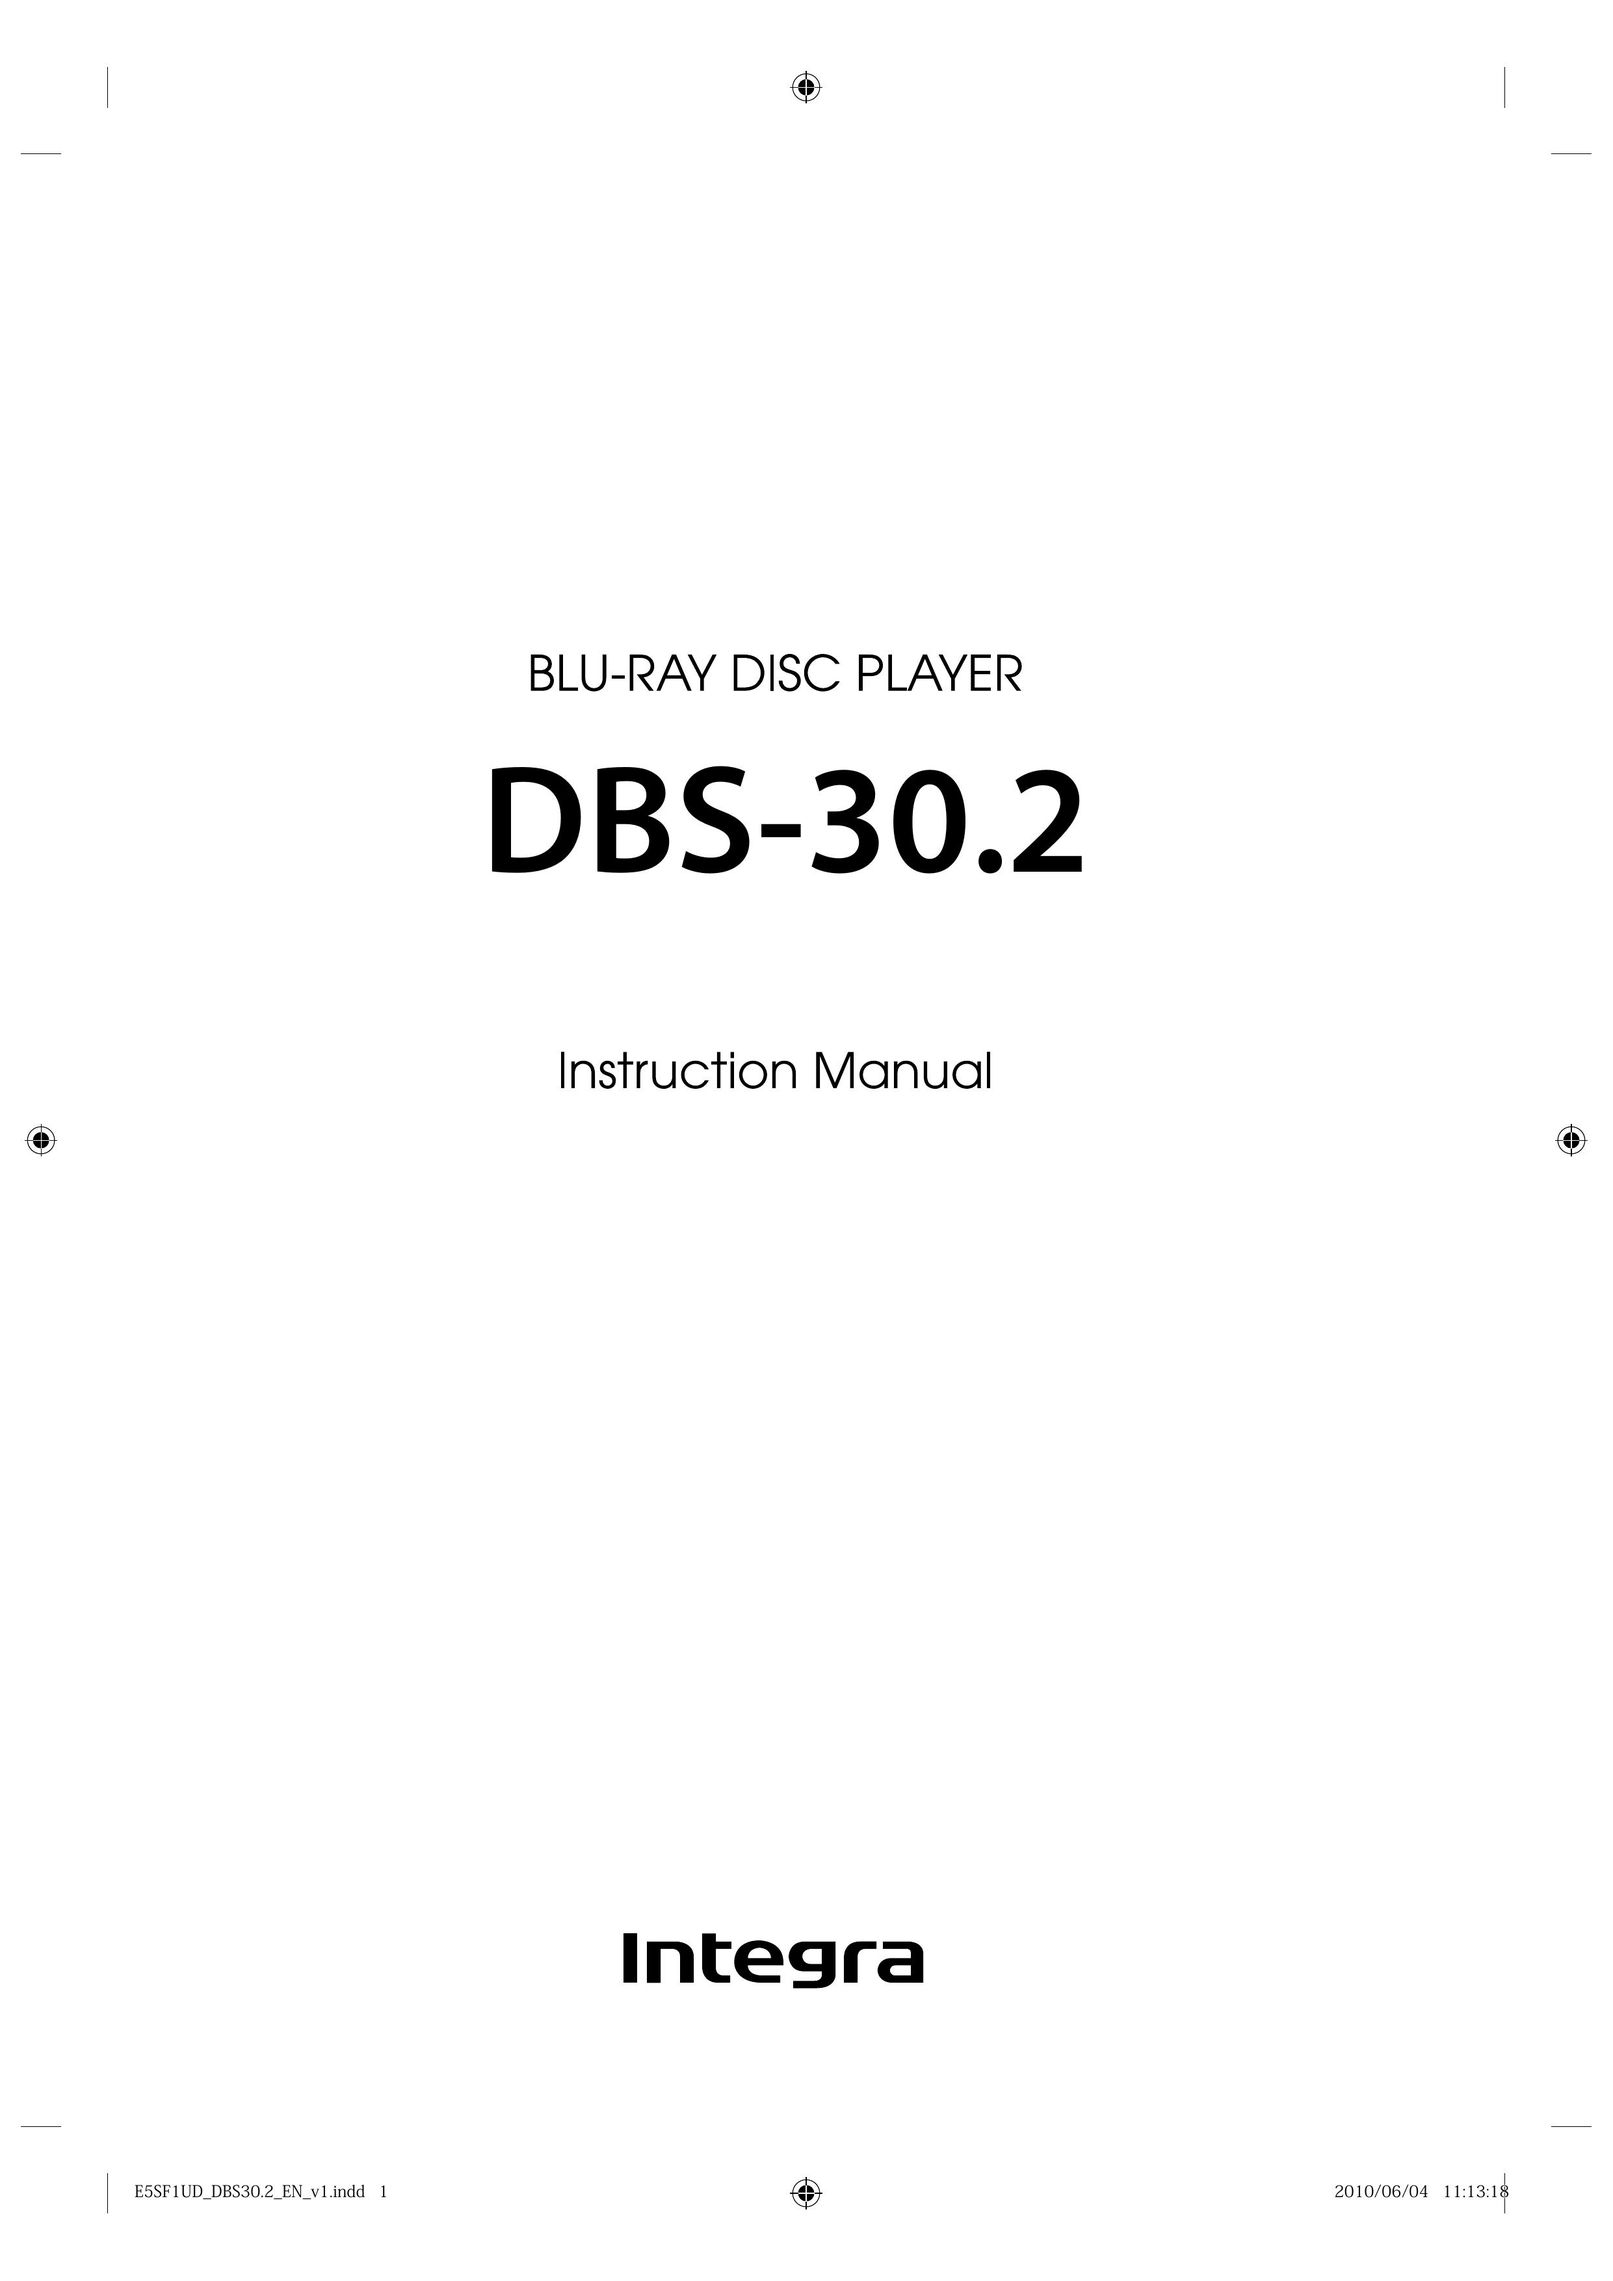 Integra E5SF1UD Blu-ray Player User Manual